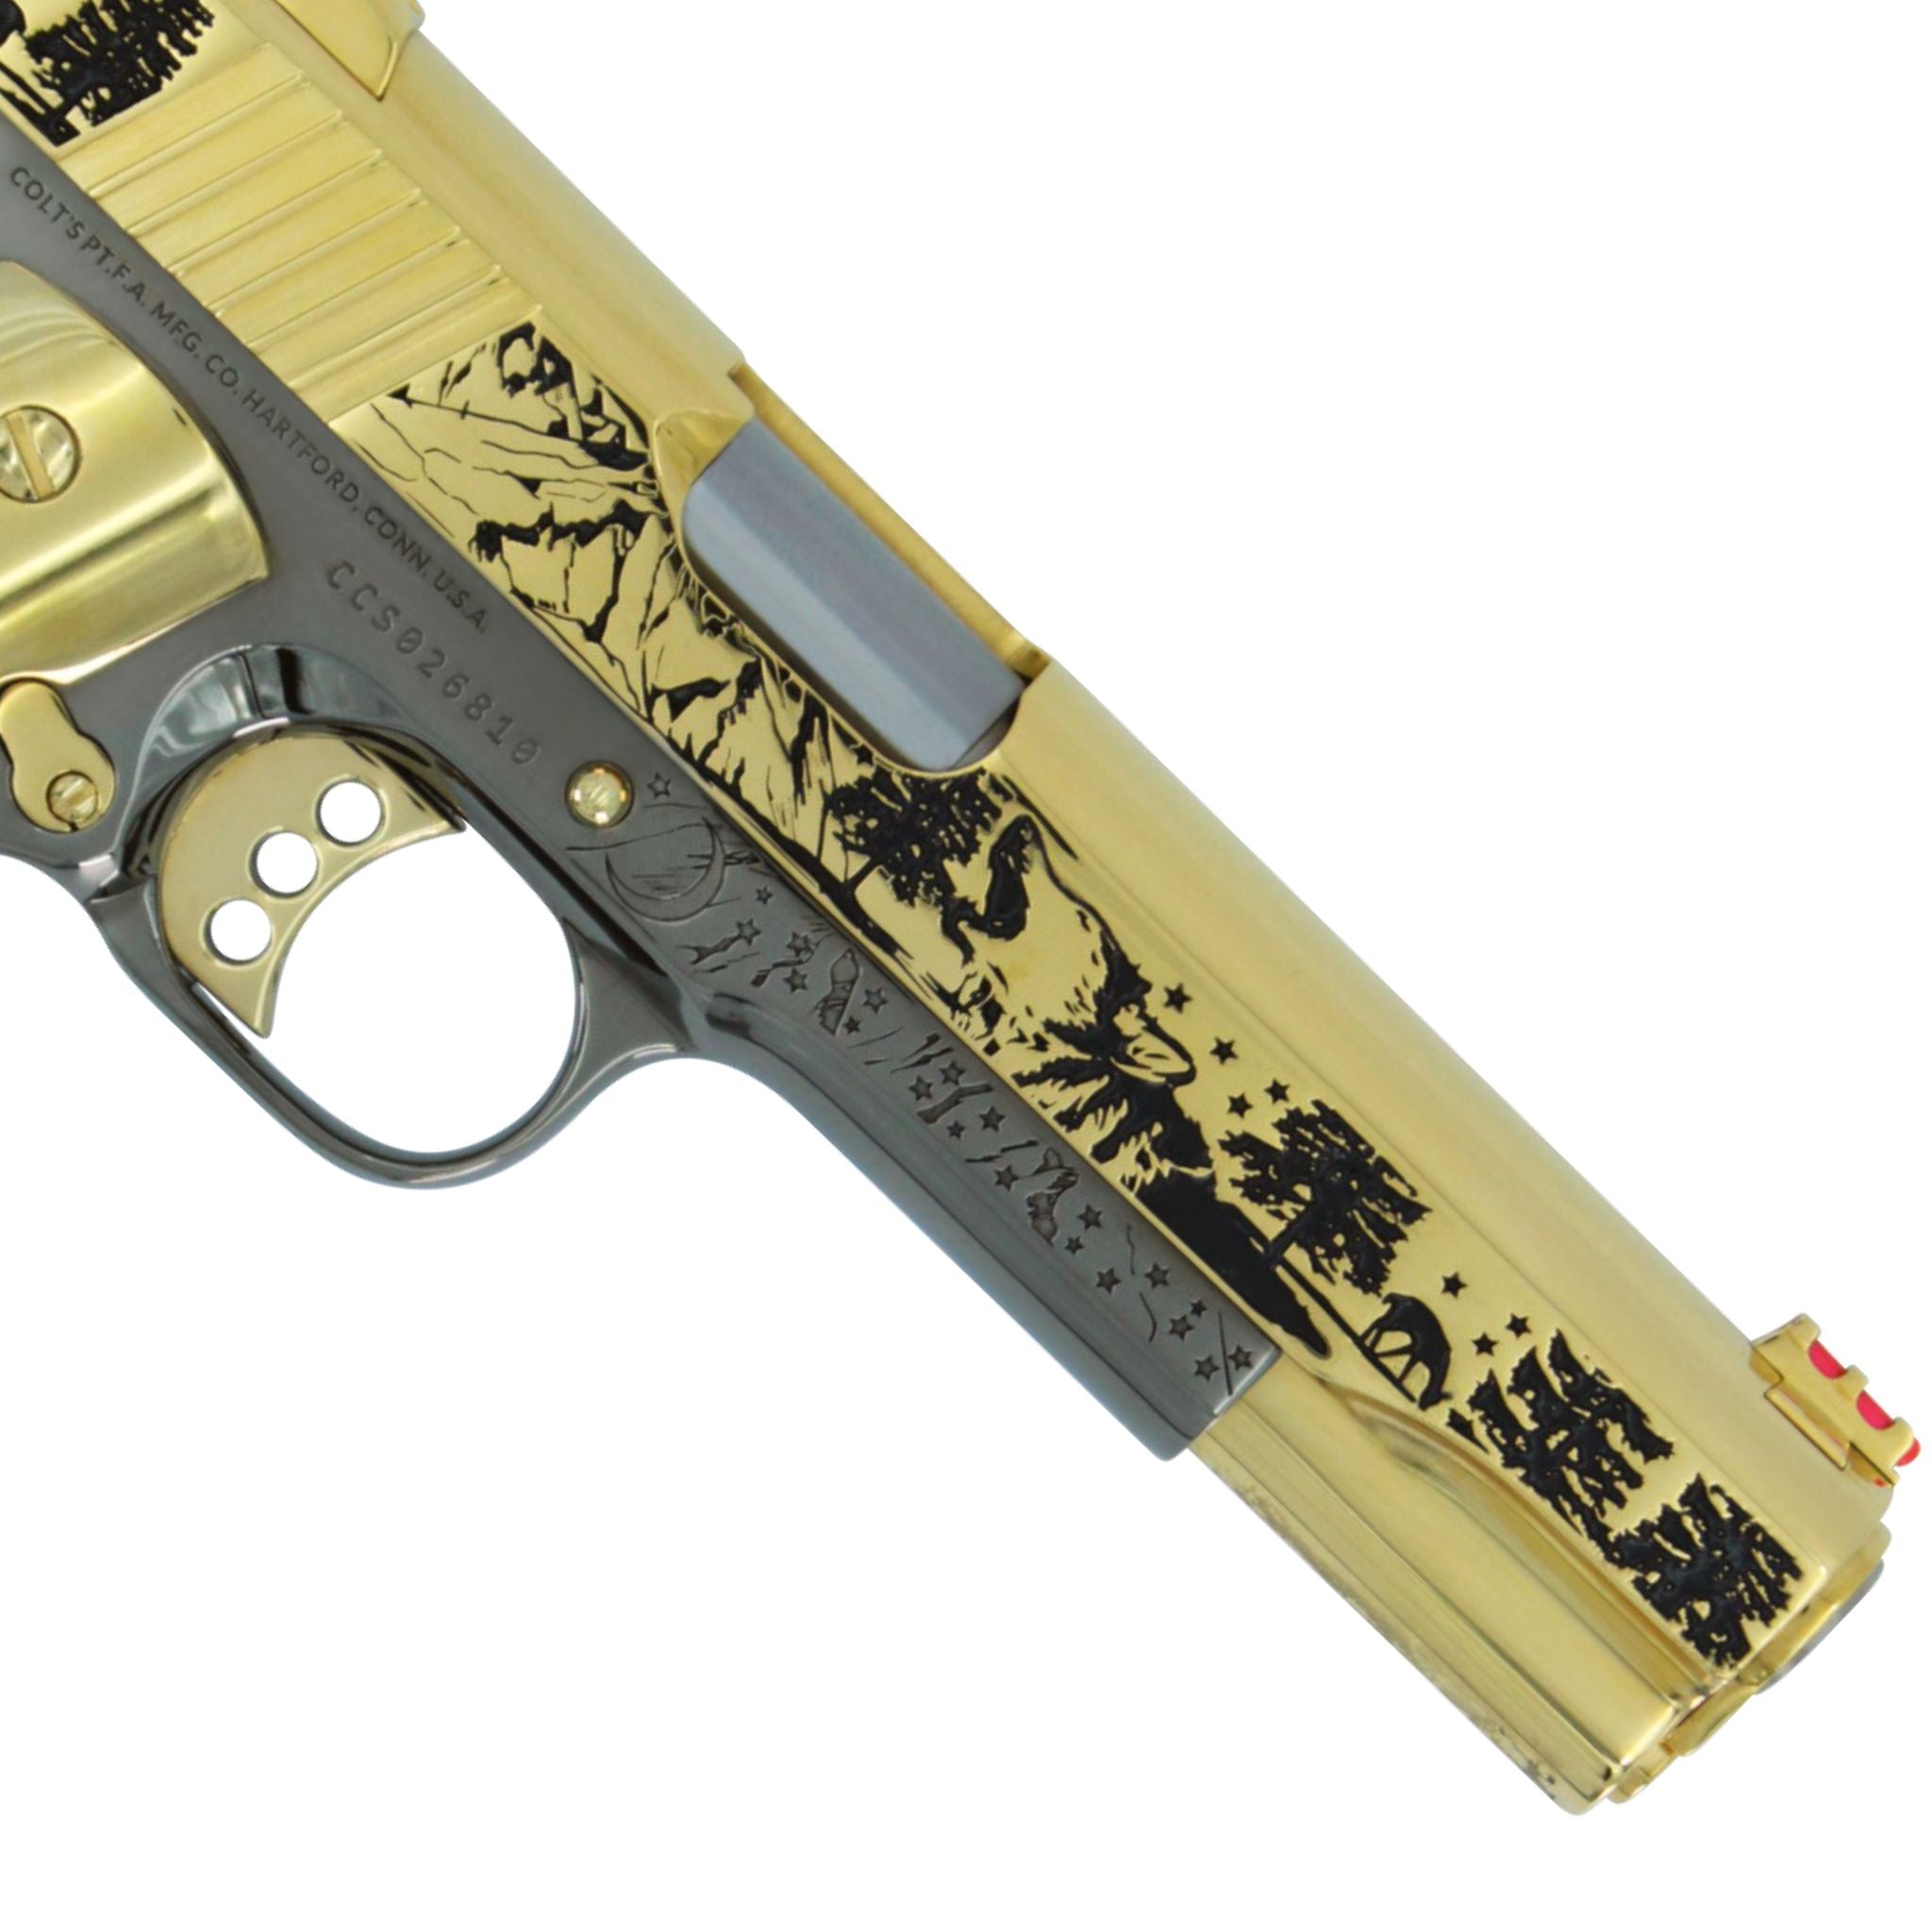 Colt 1911 Competition, 45ACP, Spirit of the Wolf, 24K Gold Plated Slide With a Black Chrome Frame, SKU: 4903288045670, 24 karat gold gun, 24 Karat Gold Firearm